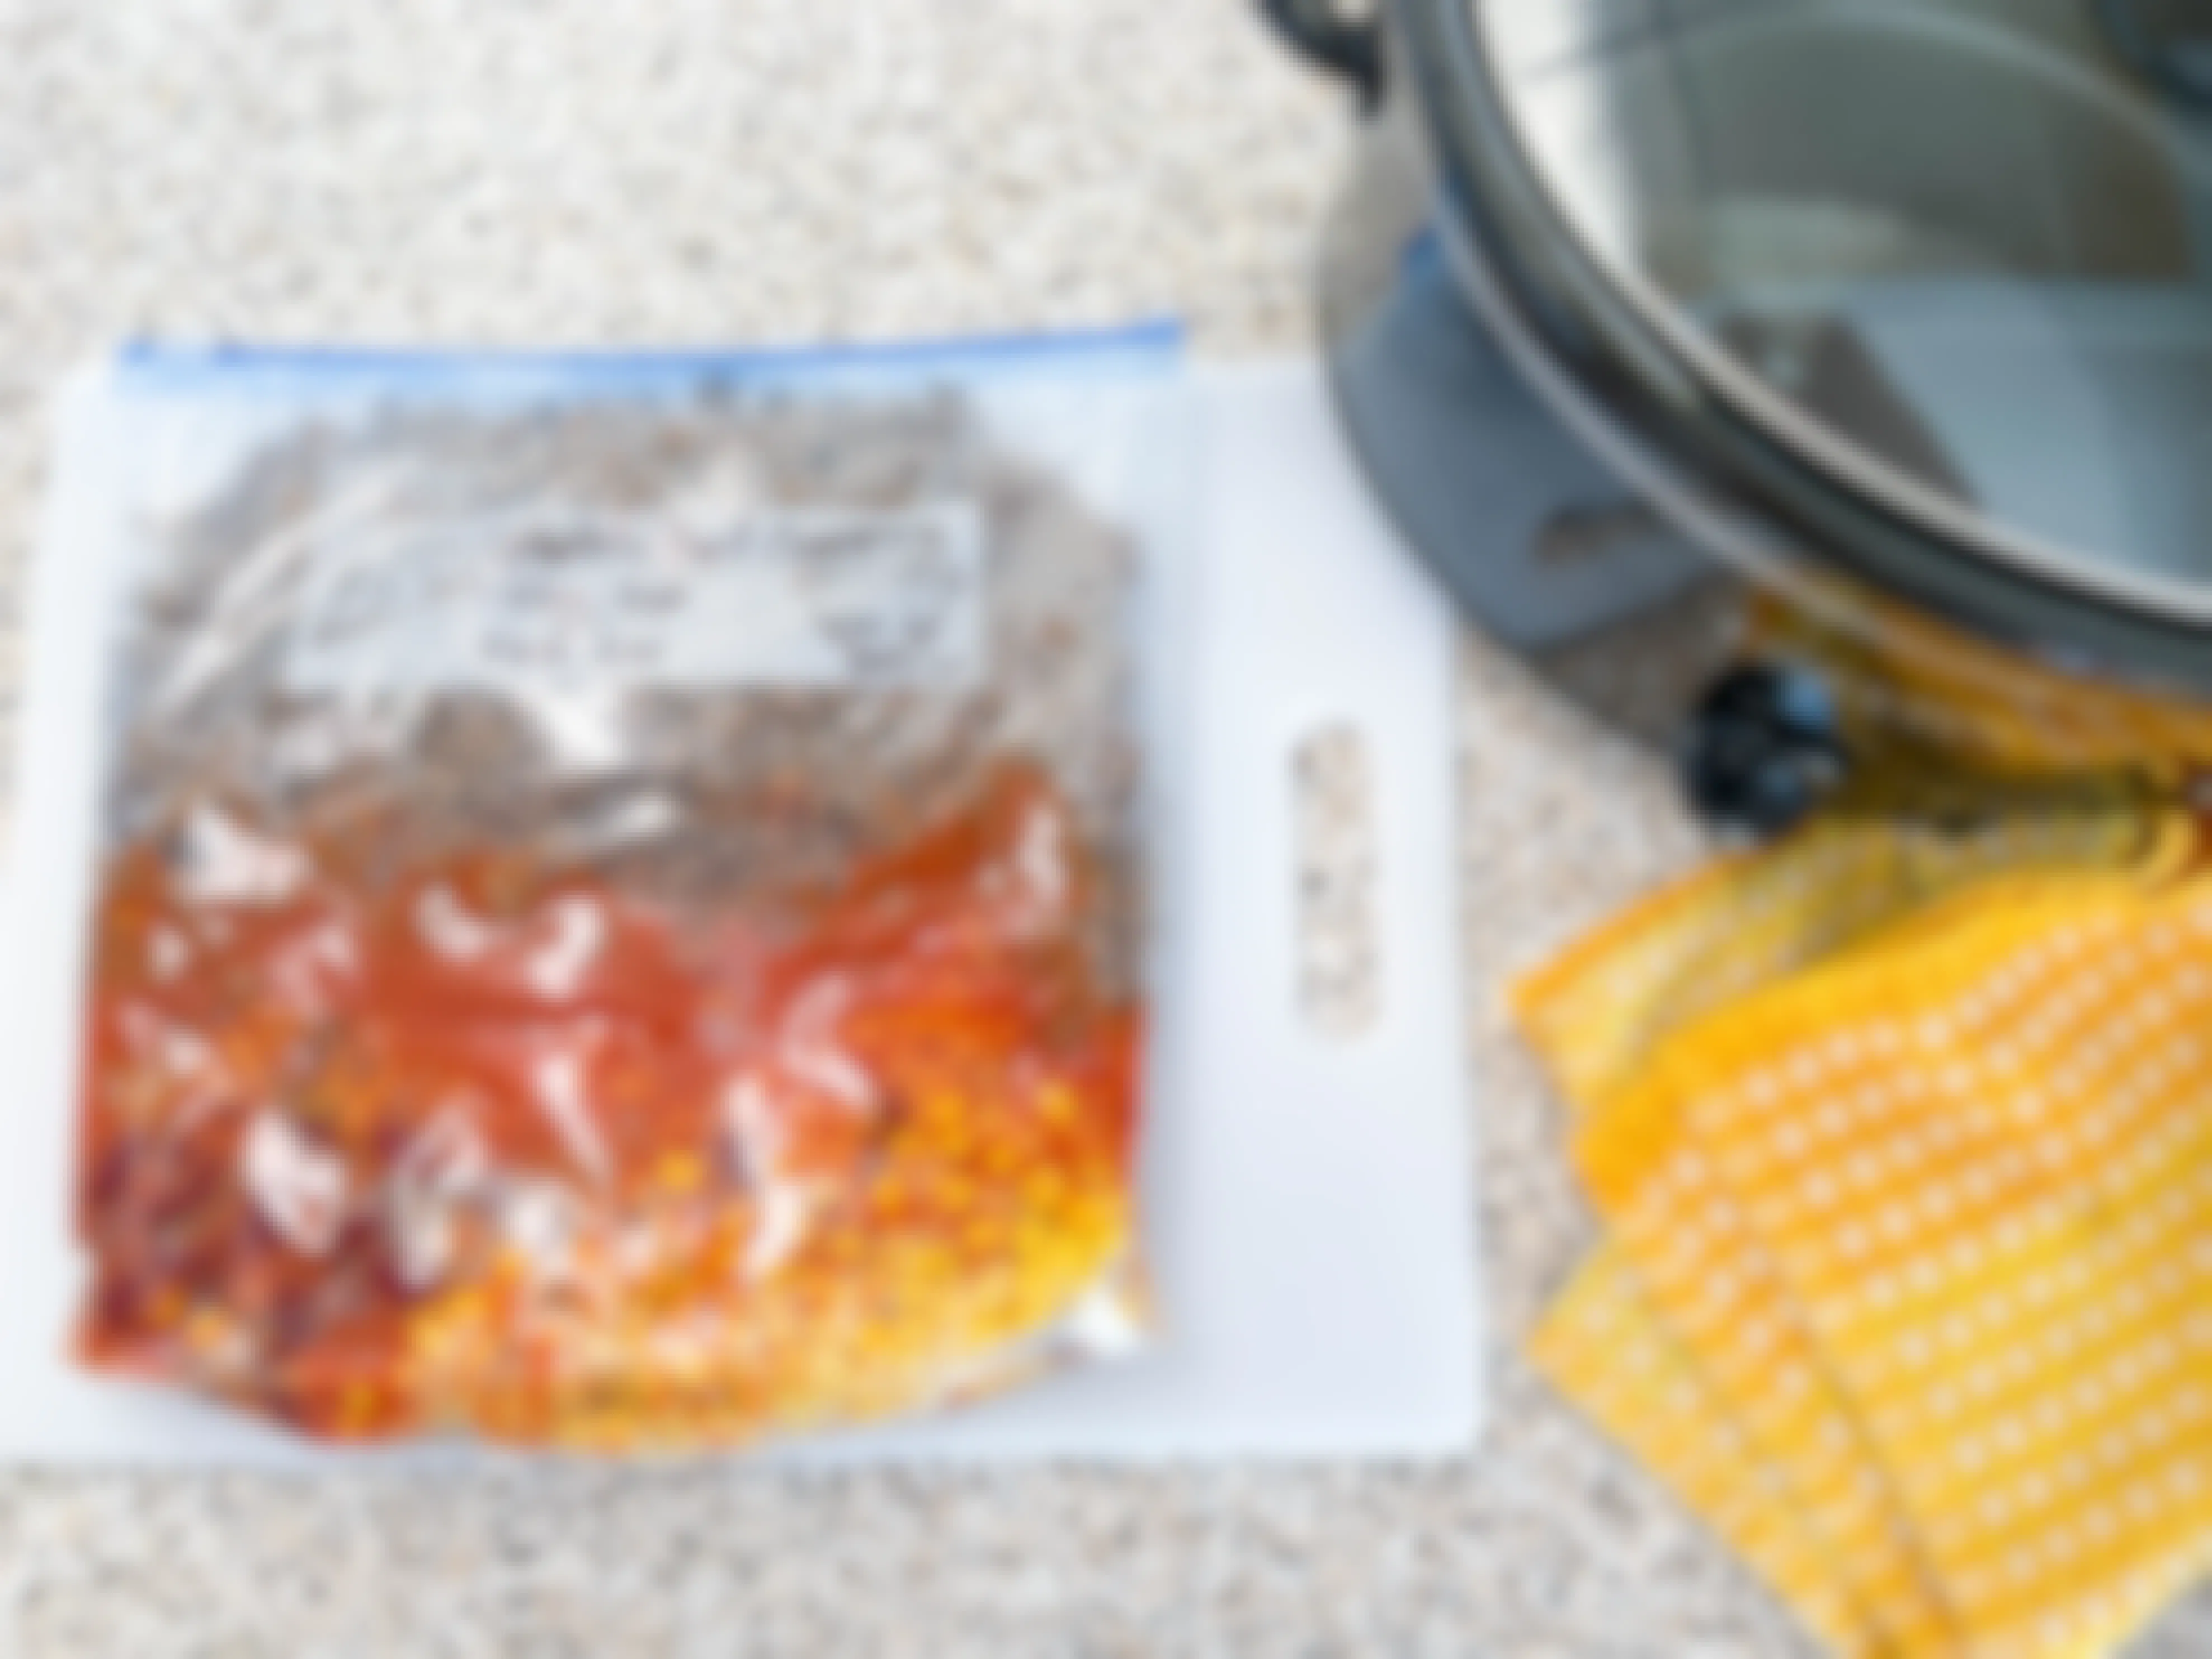 a freezer meal in a ziploc bag